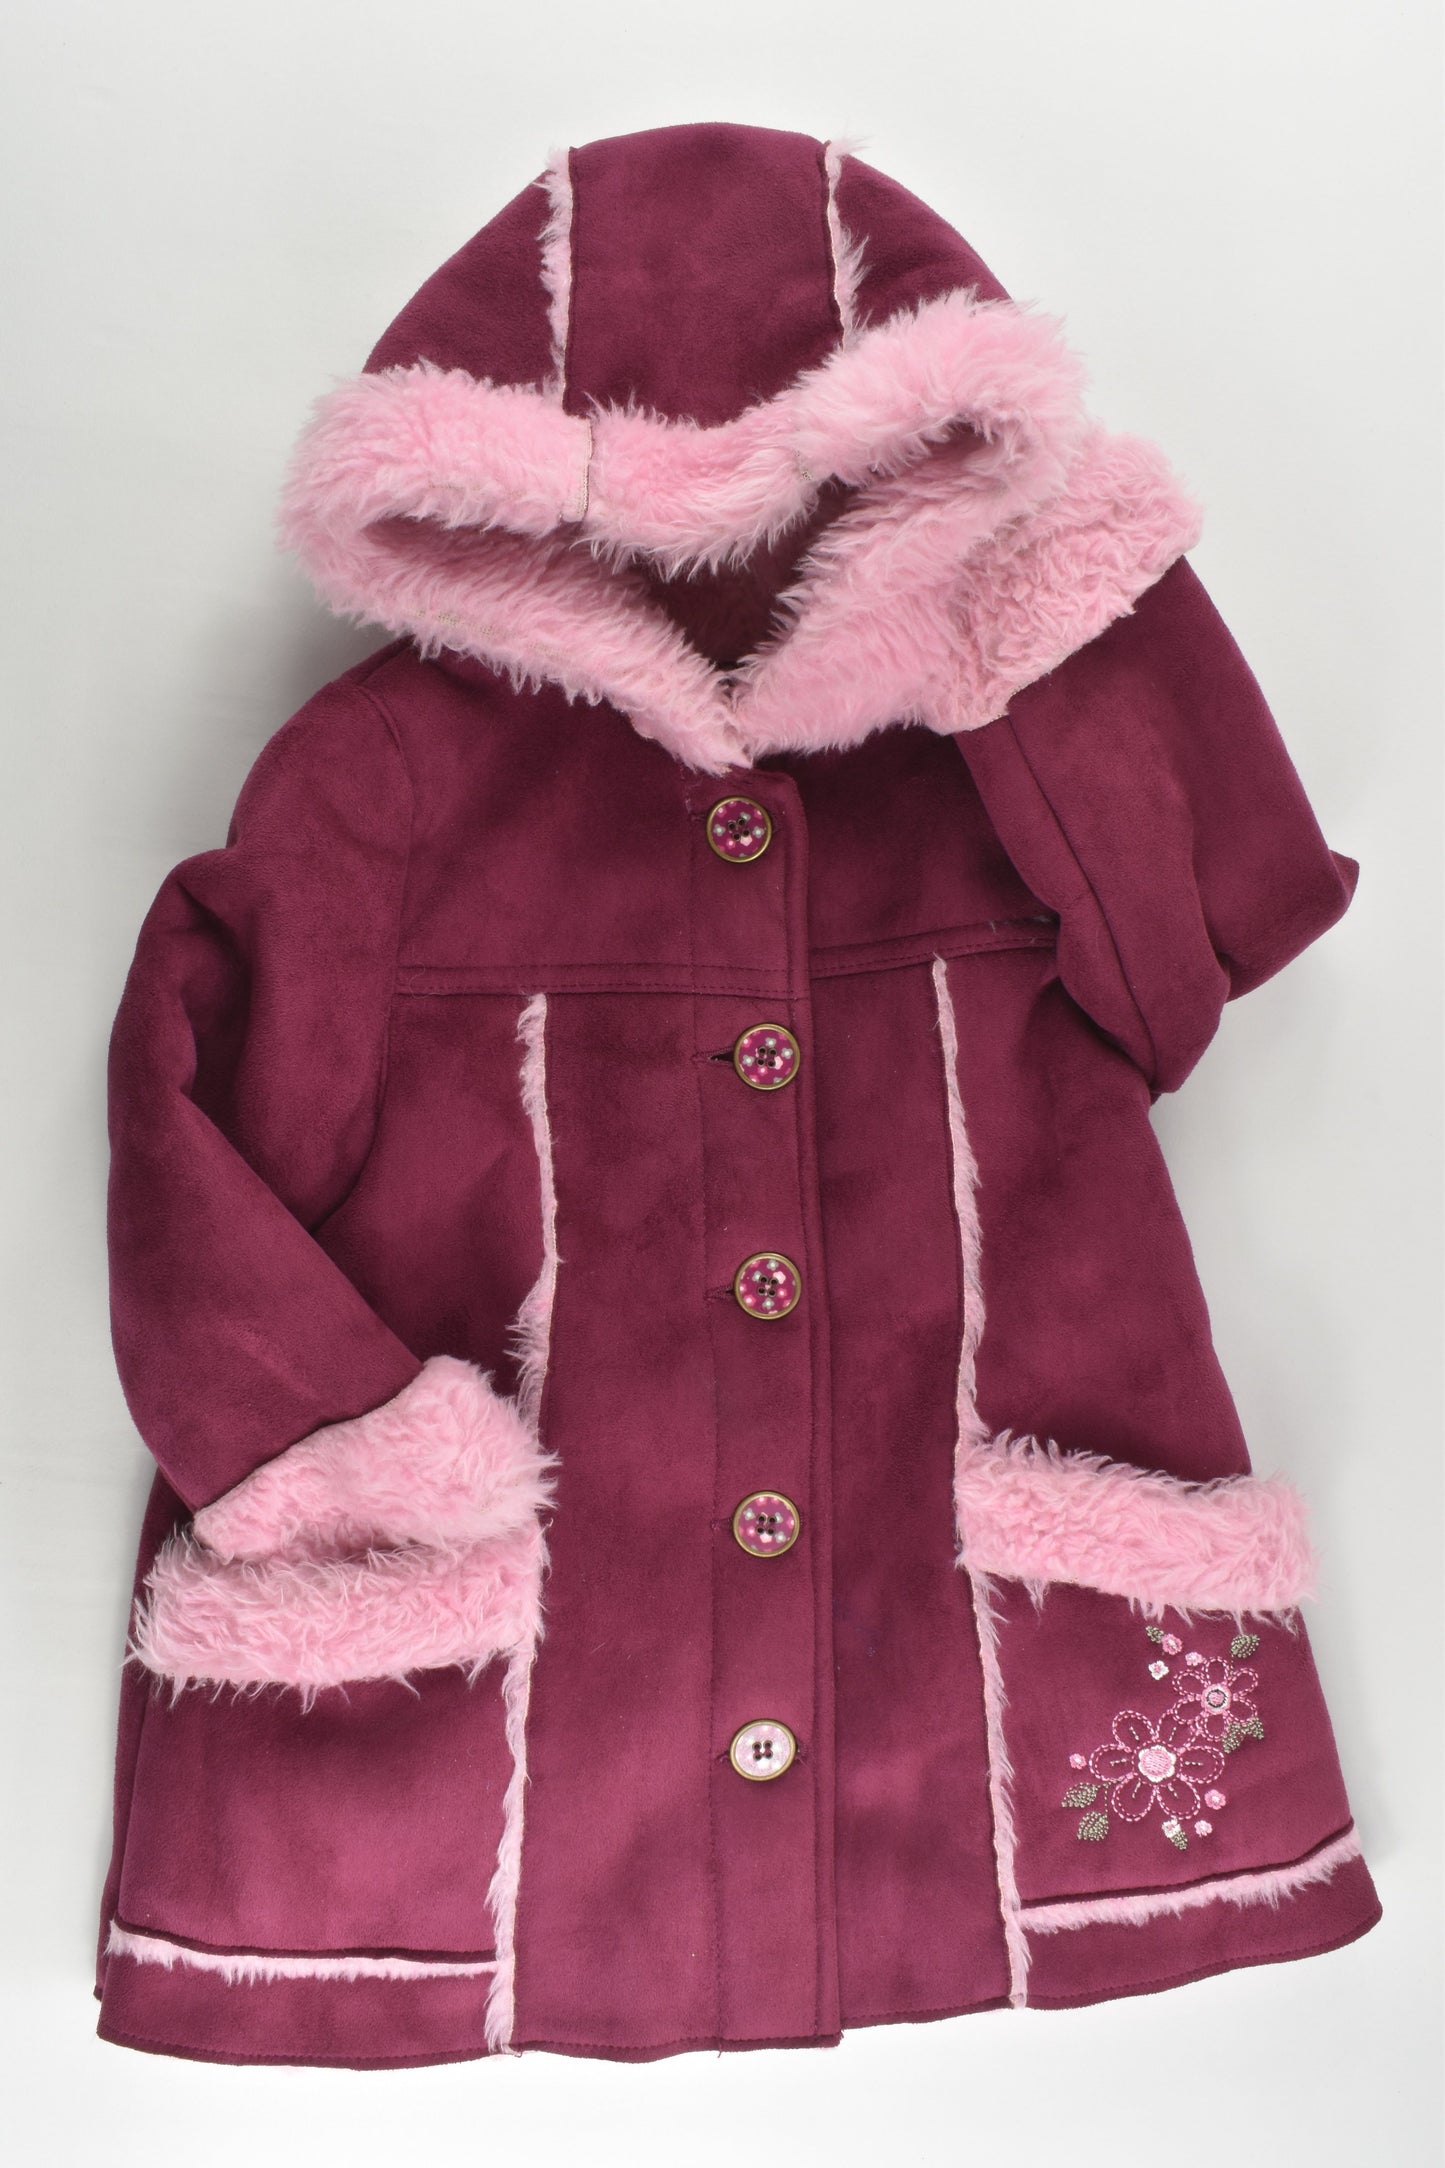 Target Size 3 Warm Winter Jacket